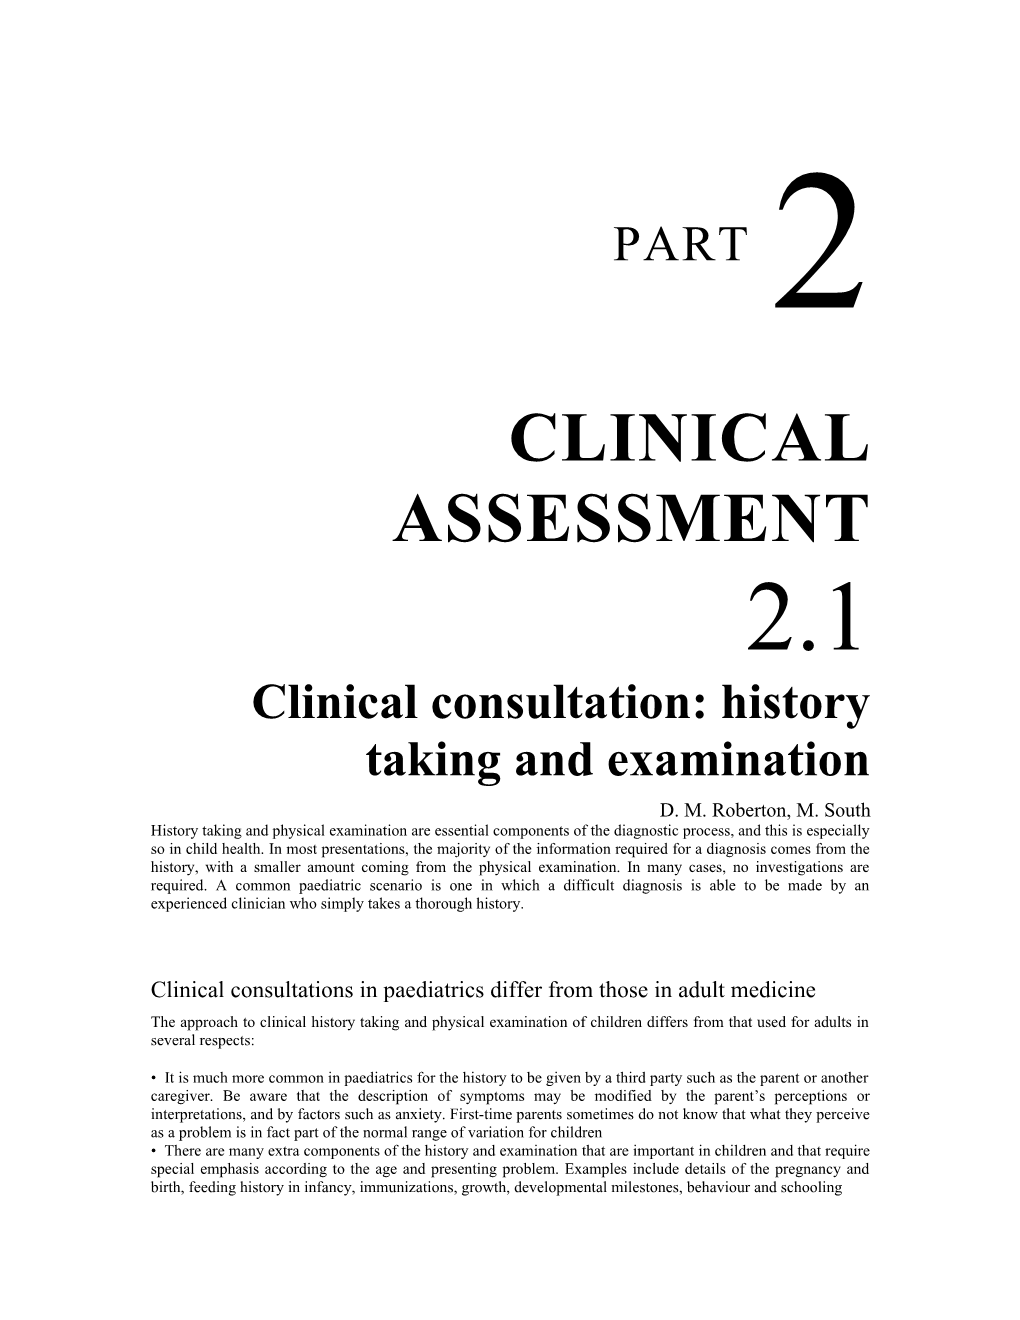 Clinical Consultation: History Taking and Examination